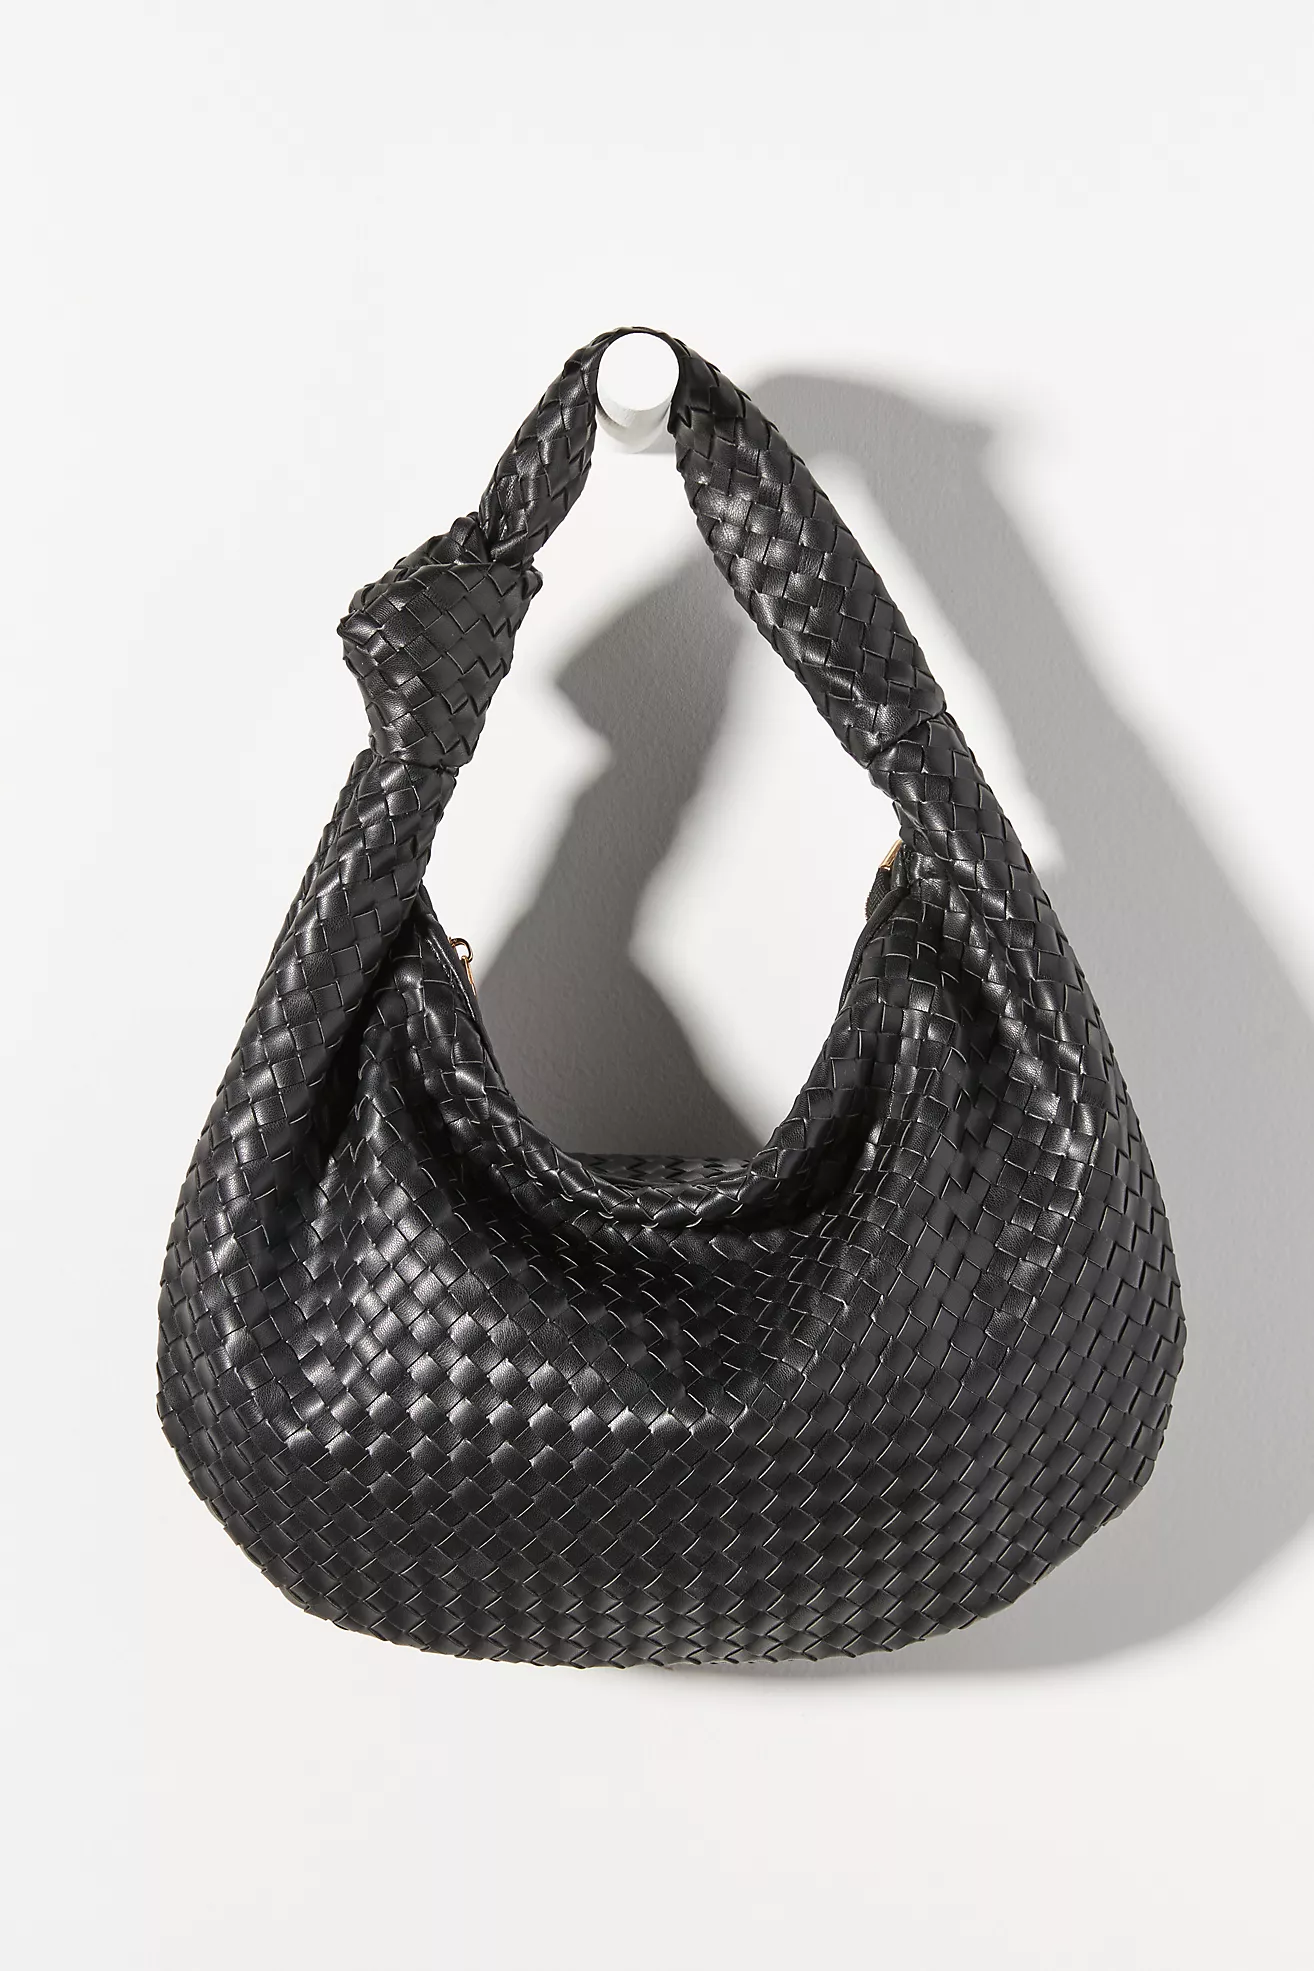 Women's Designer Handbags Laptop Sleeve by taiche